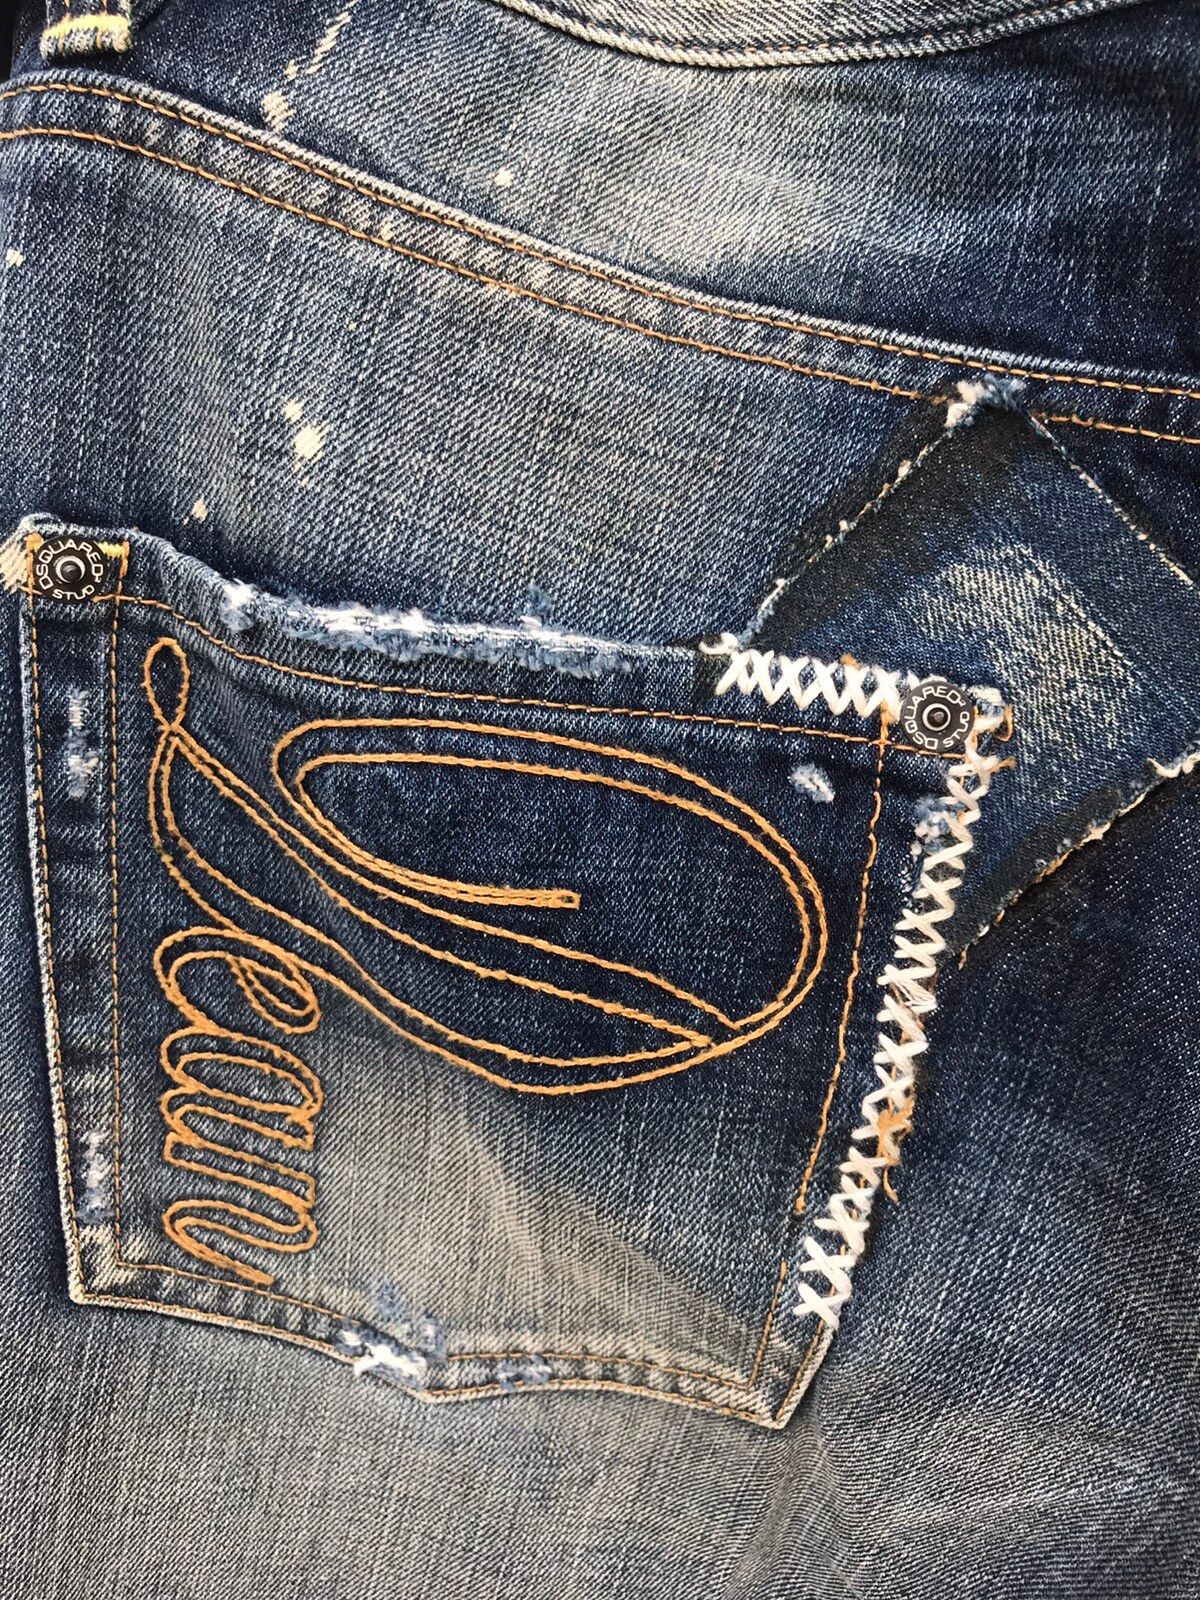 Vintage Dsquared2 Denim Jeans Rare Design - 13